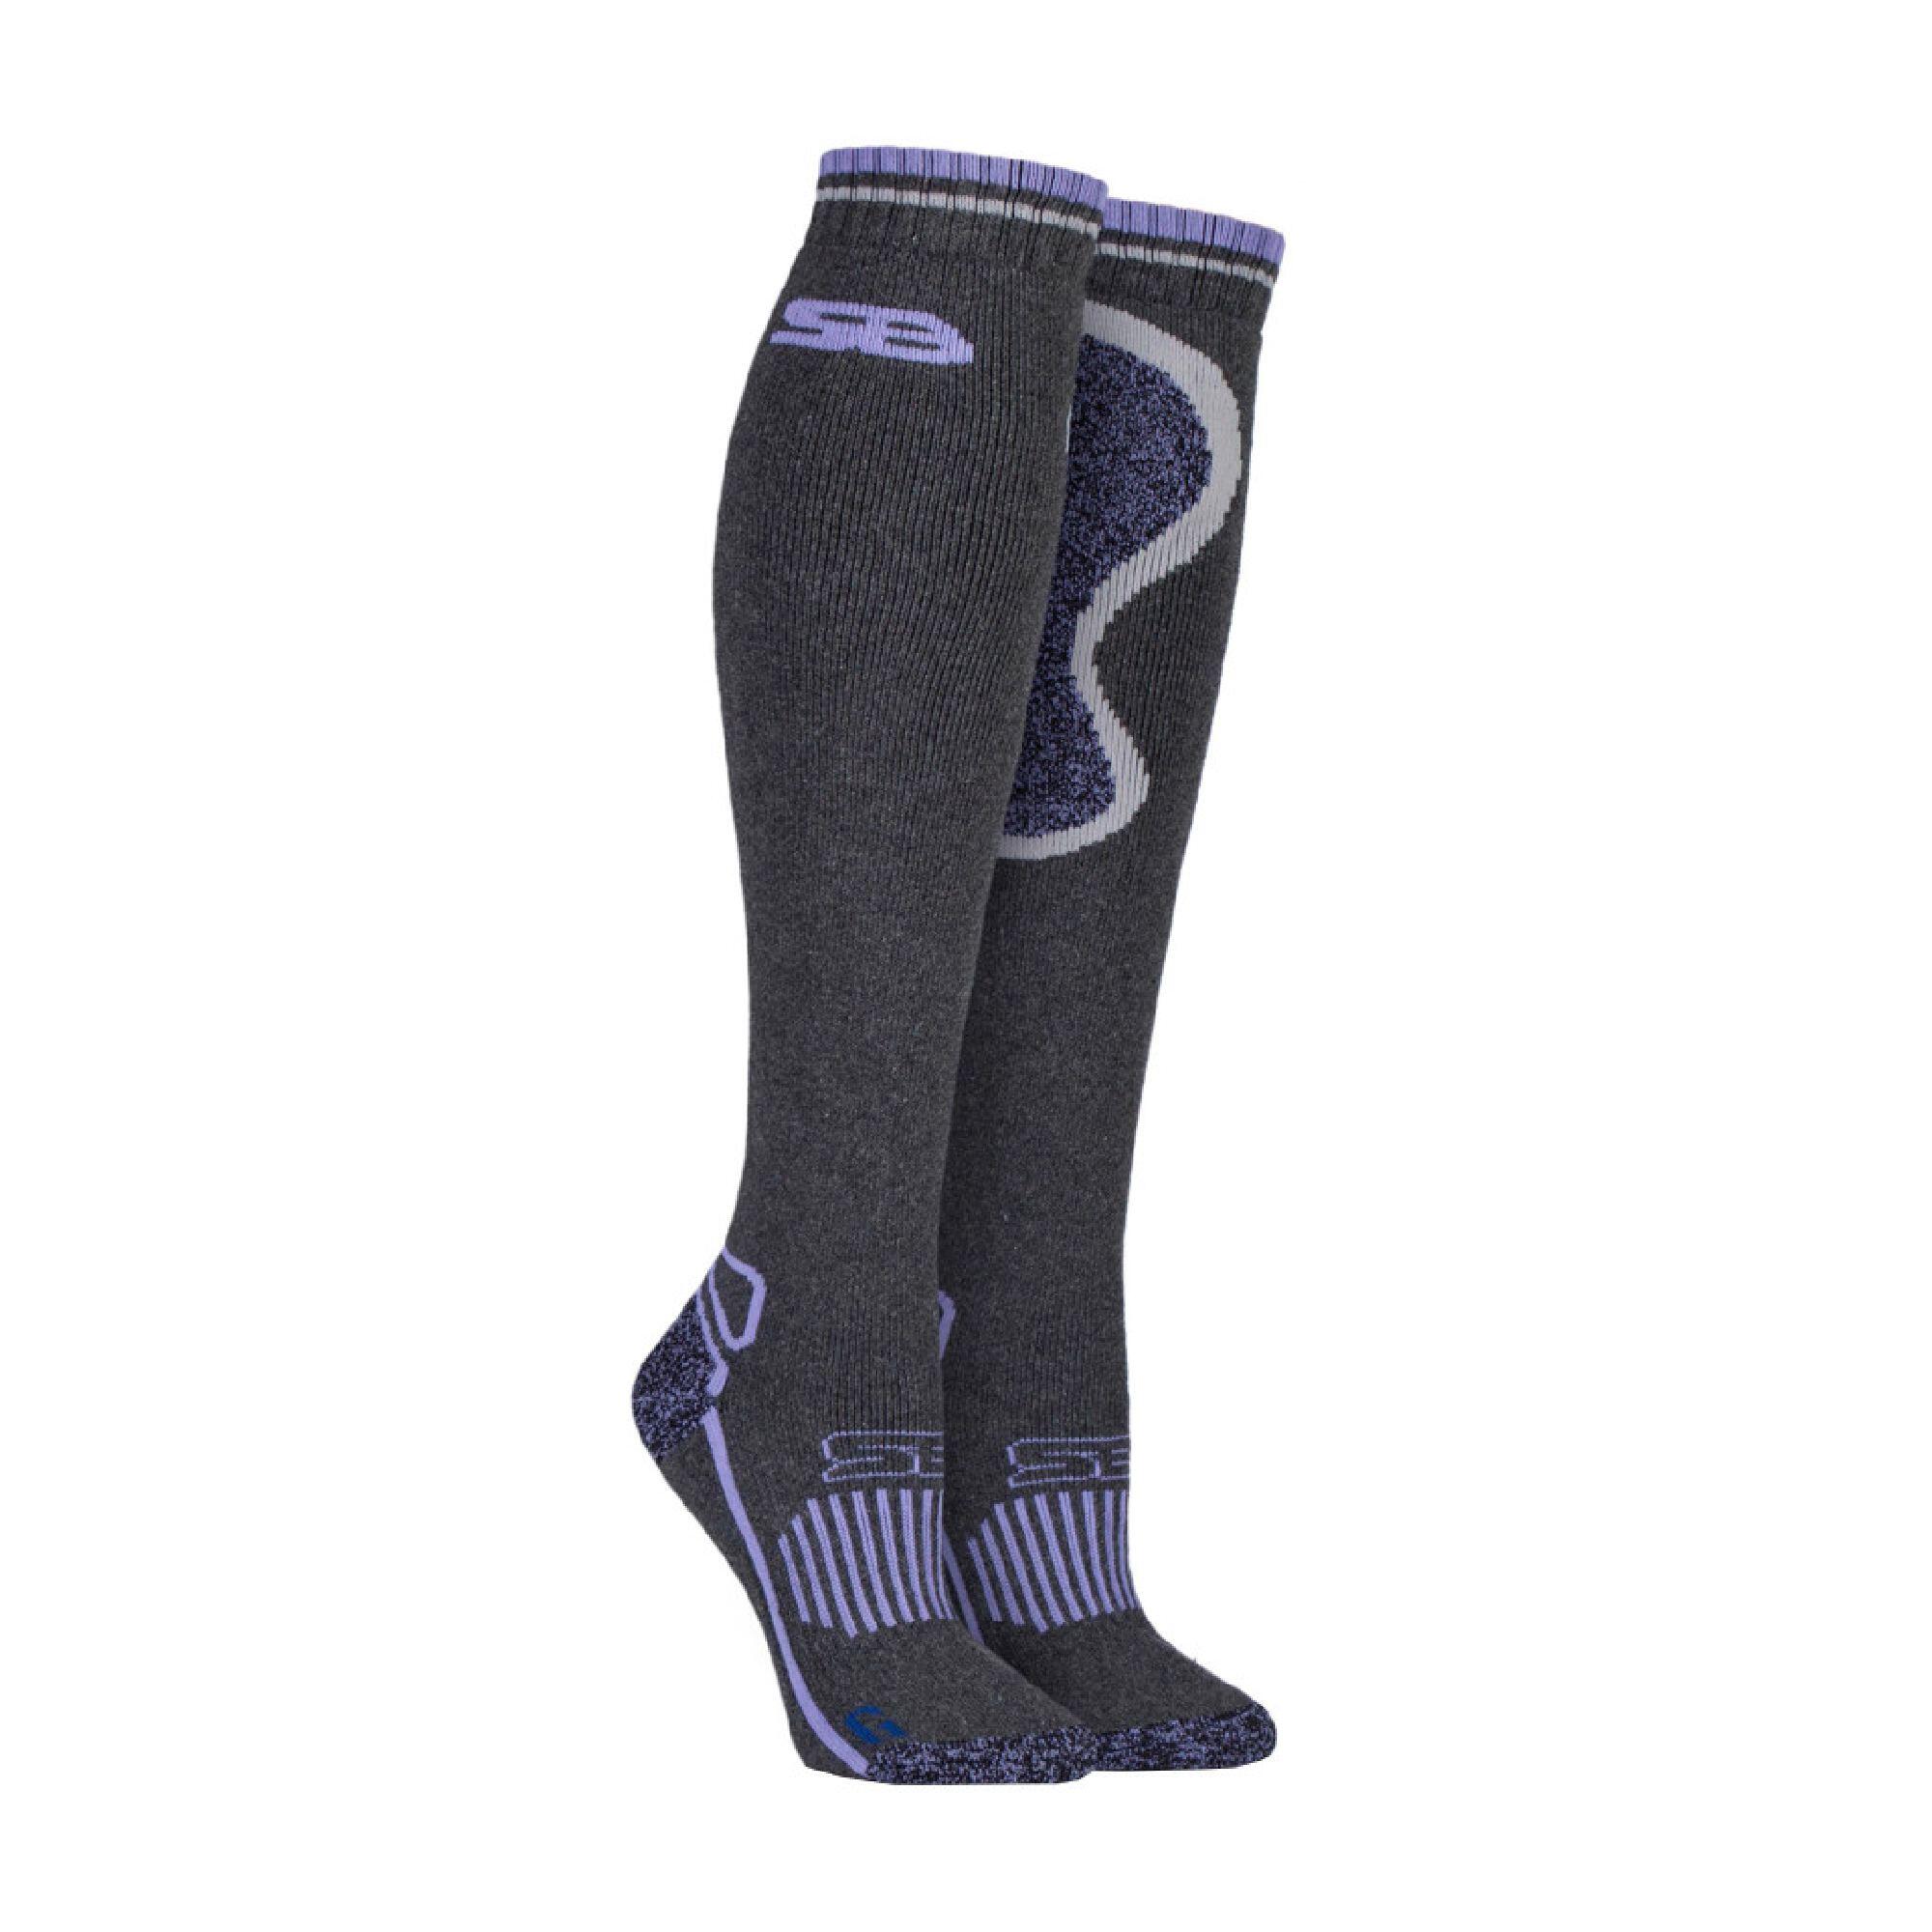 STORM BLOC Ladies Long Knee High Wool Cushioned Thermal Equestrian / Hiking Socks